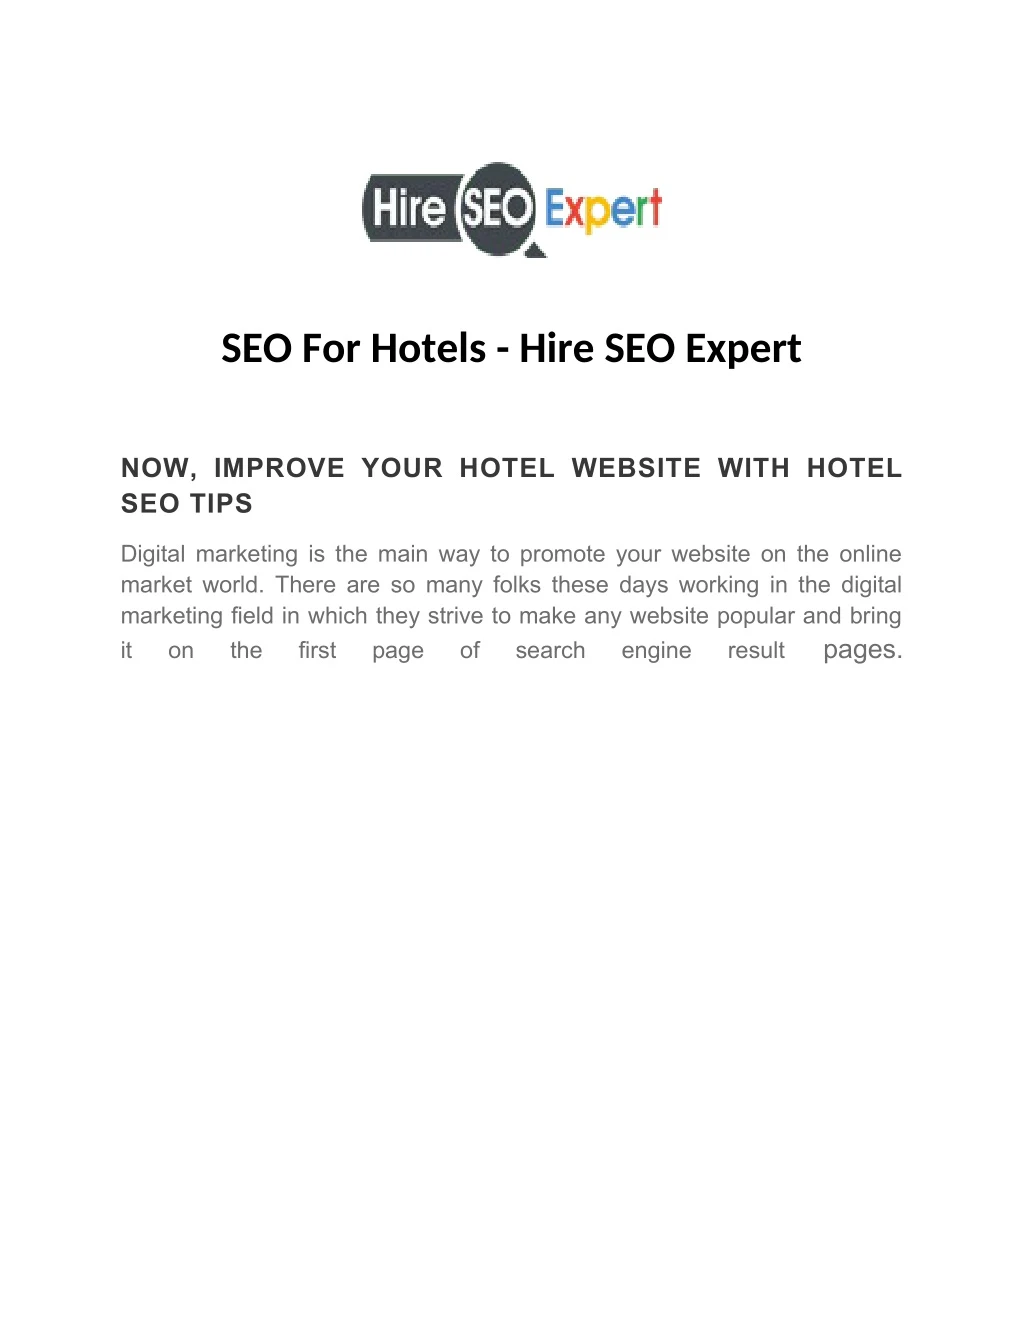 seo for hotels hire seo expert